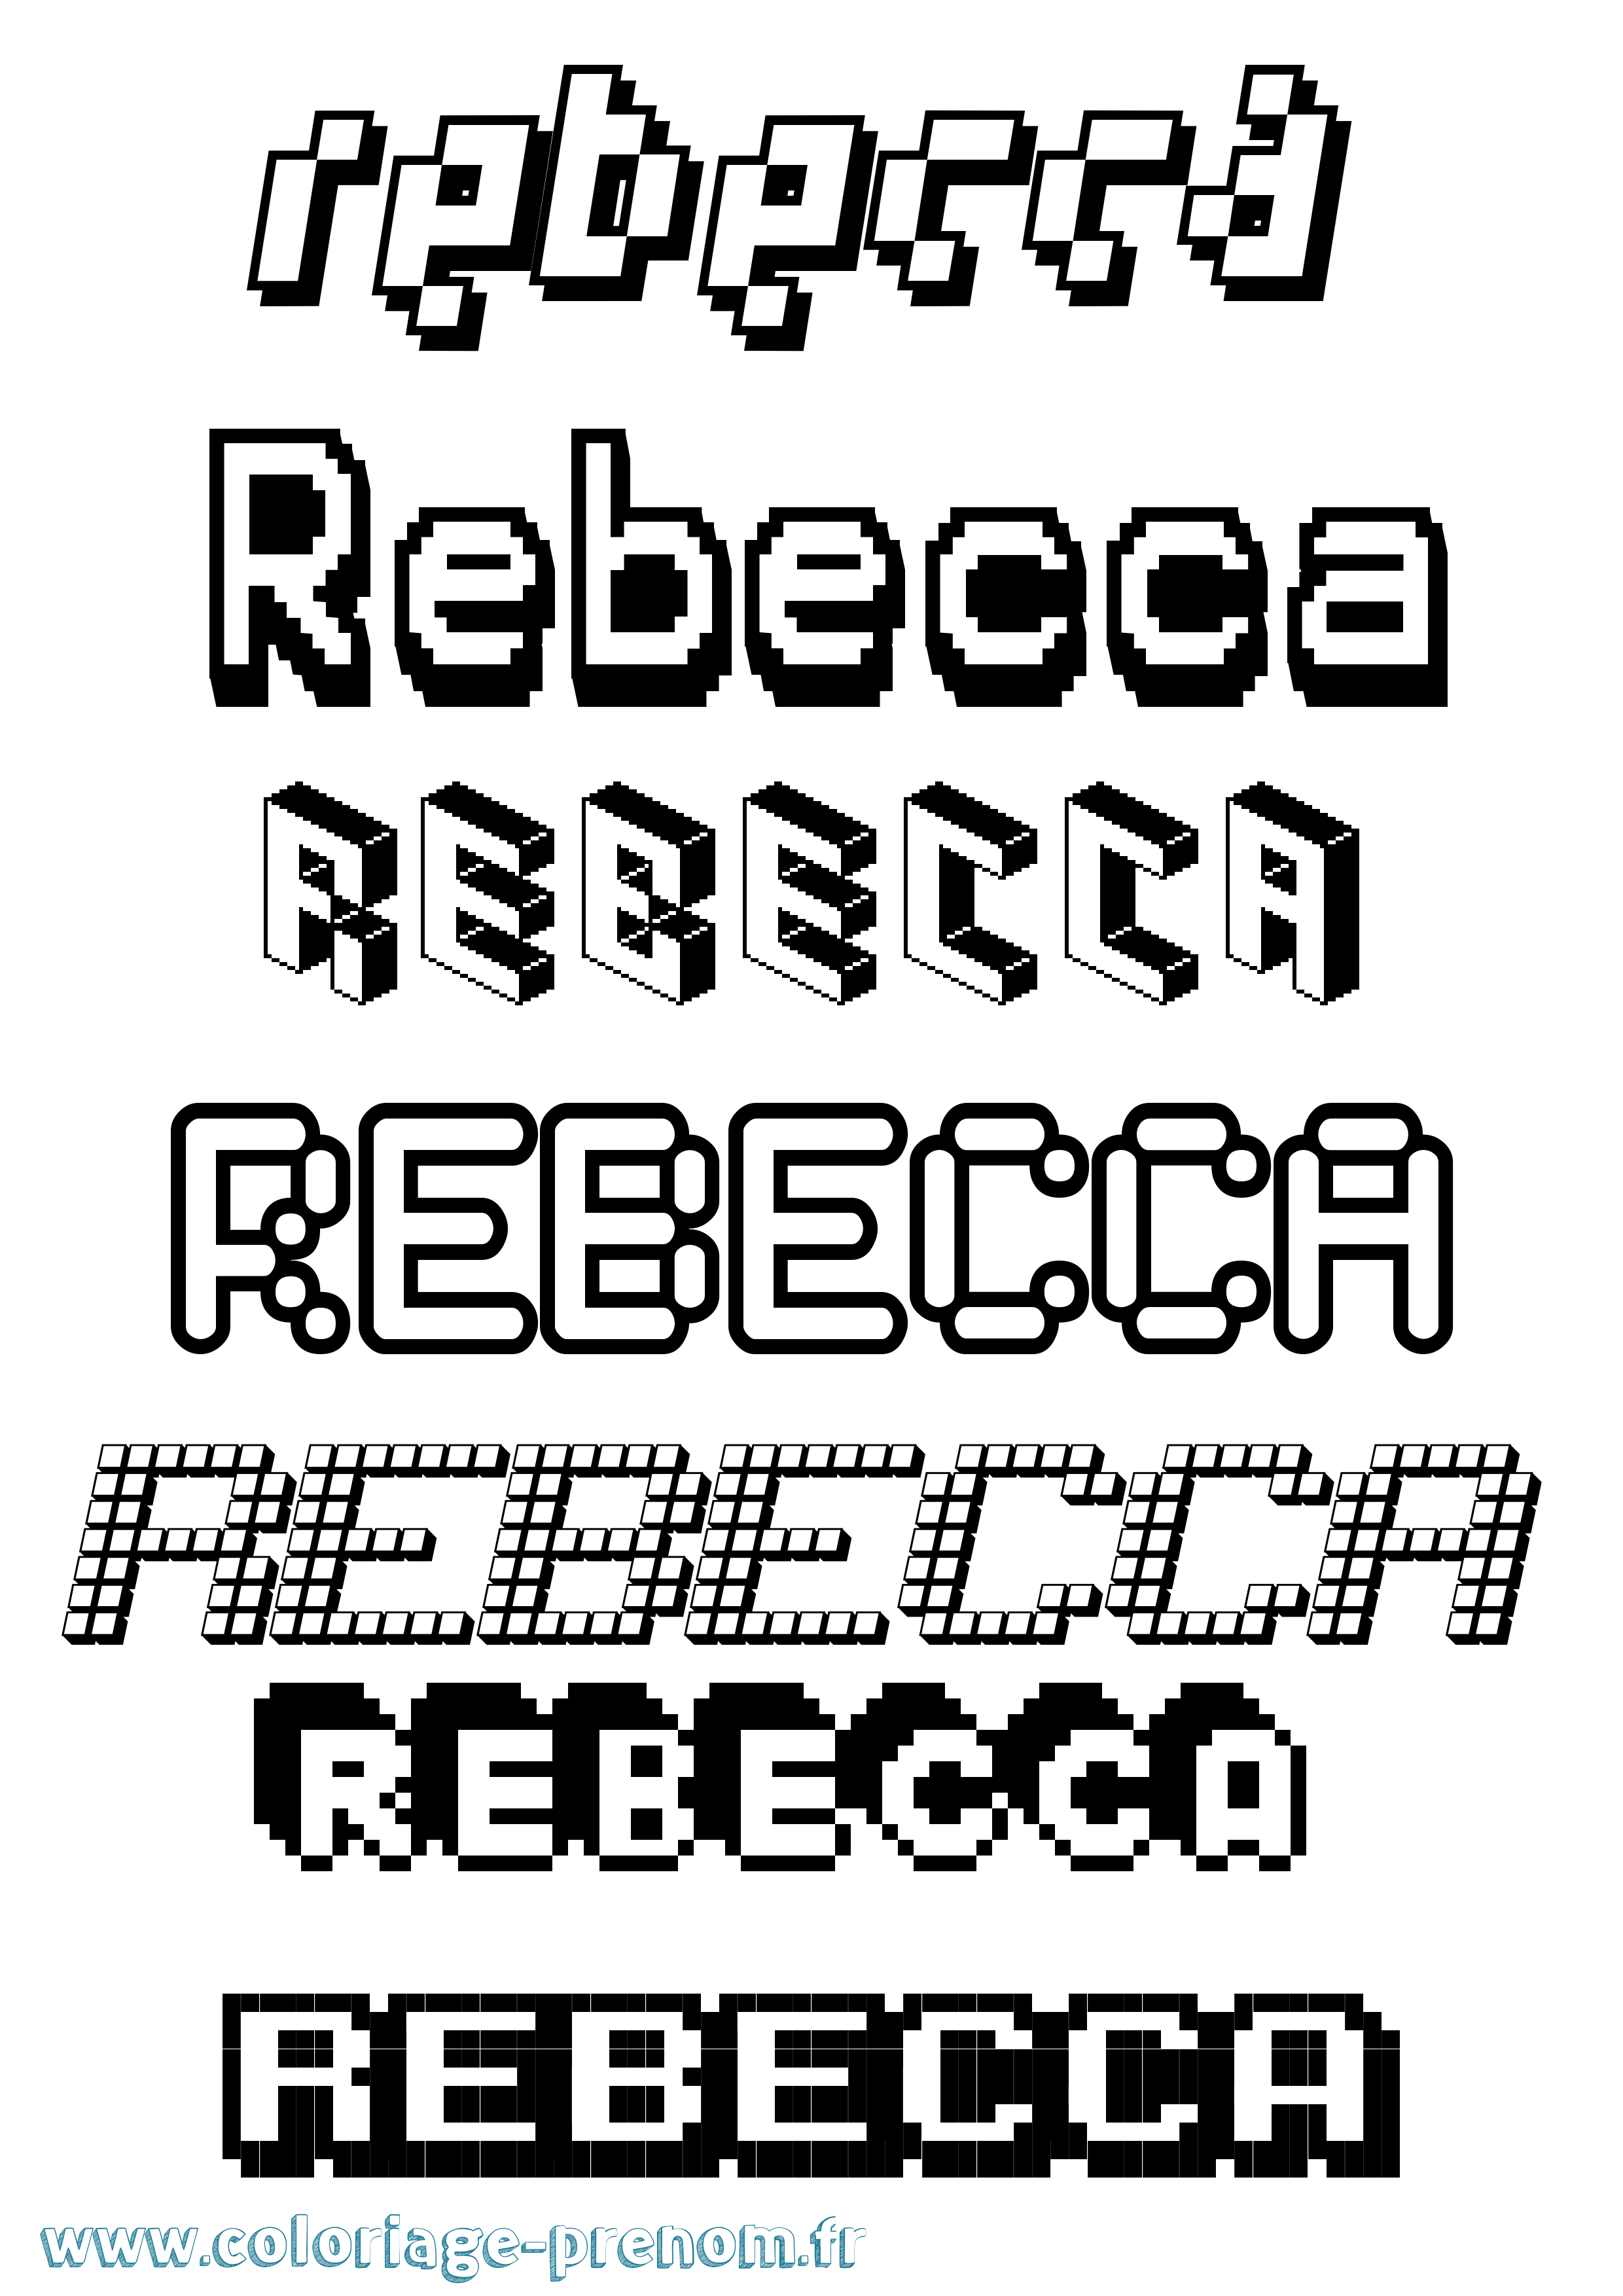 Coloriage prénom Rebecca Pixel